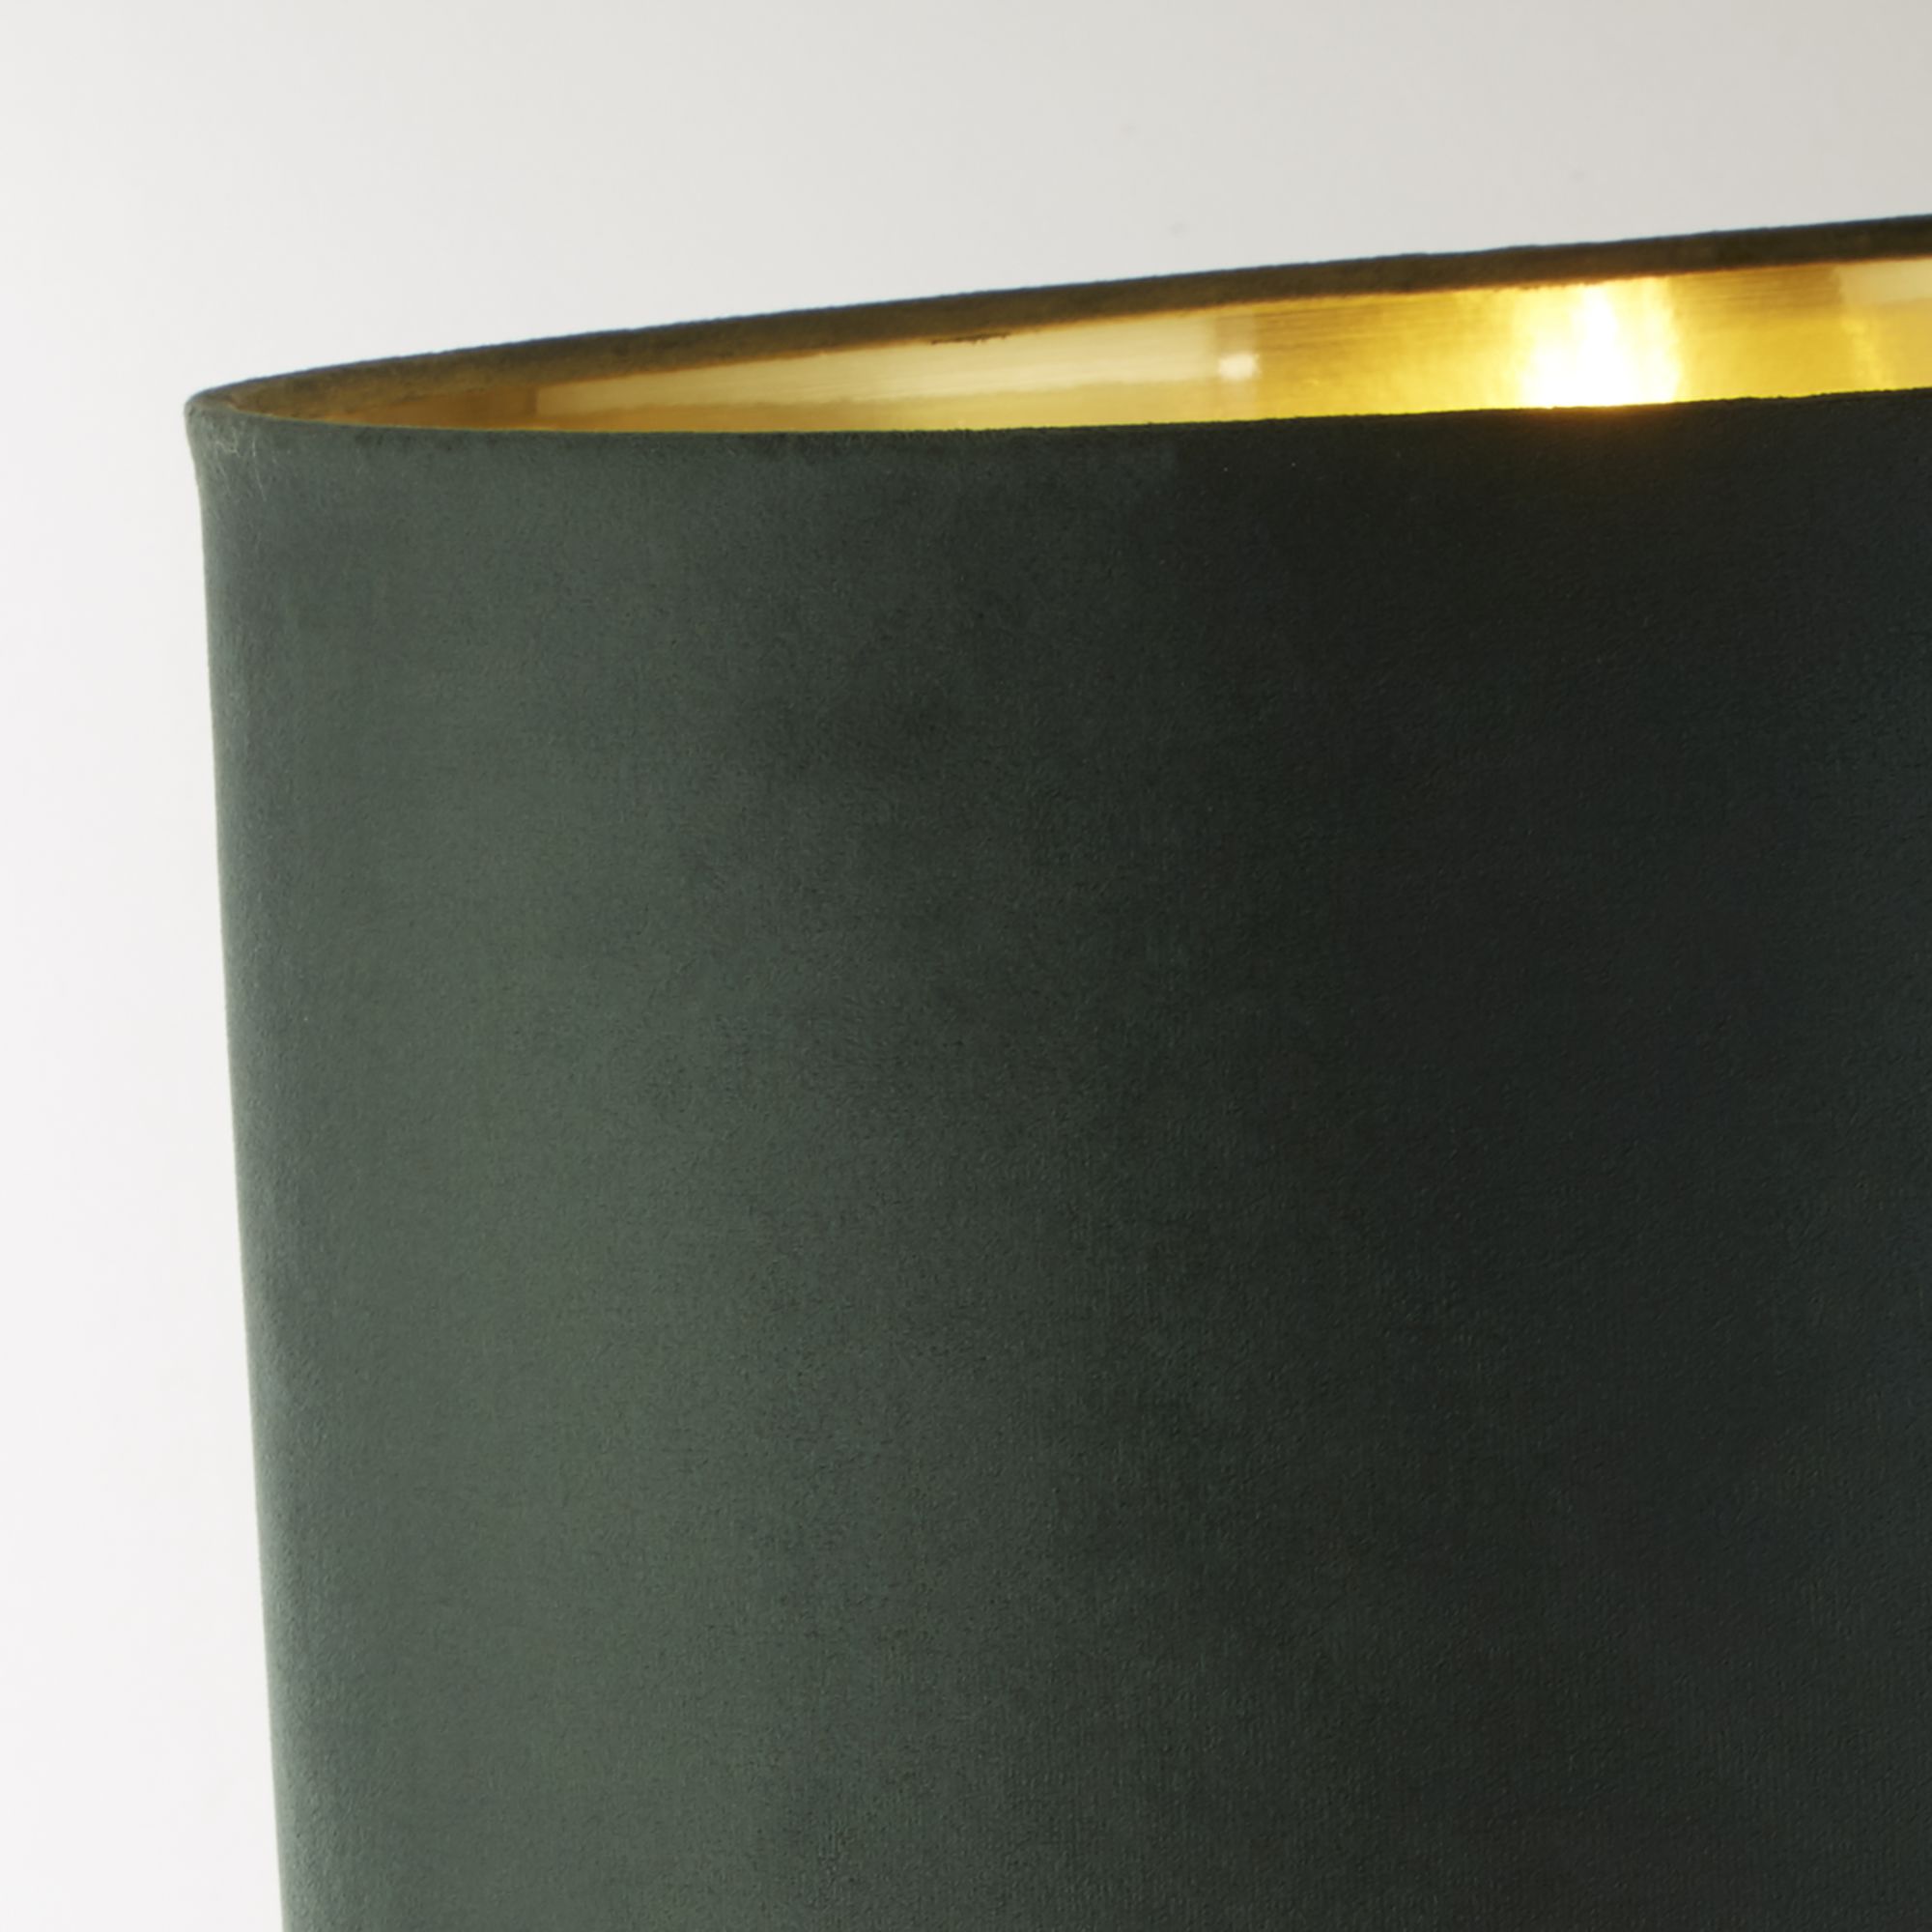 Scarborough Table Lamp - Crystal, Brass Metal & Green Velvet